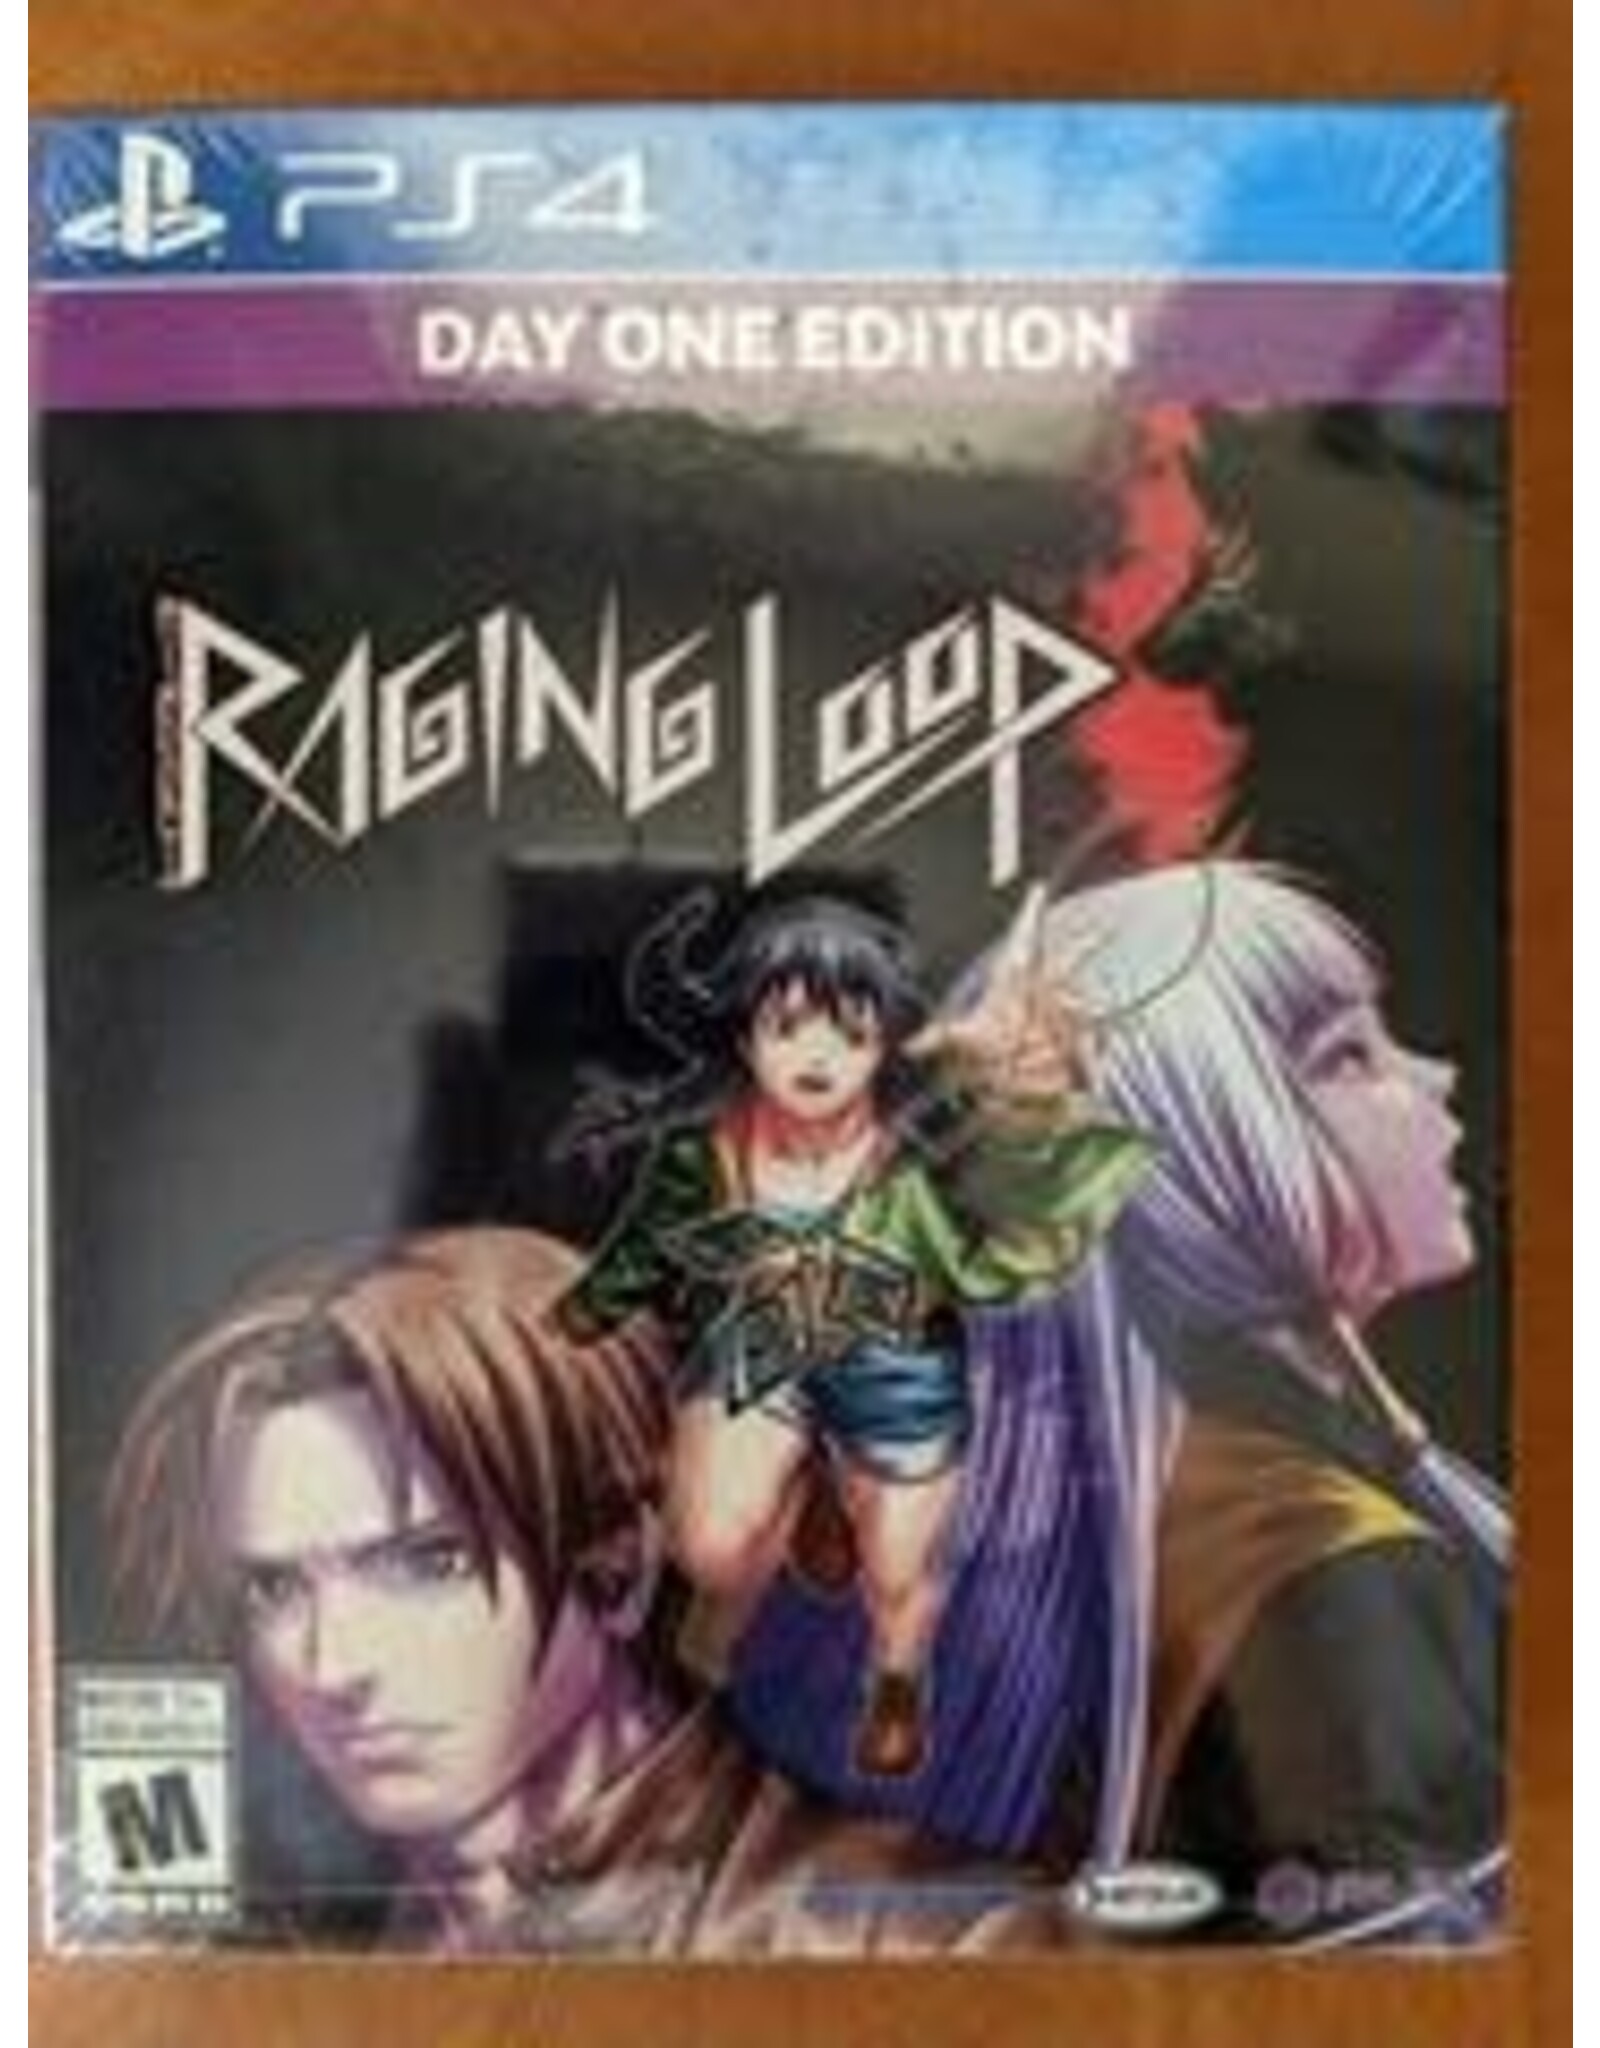 Playstation 4 Raging Loop Day One Edition (CiB)